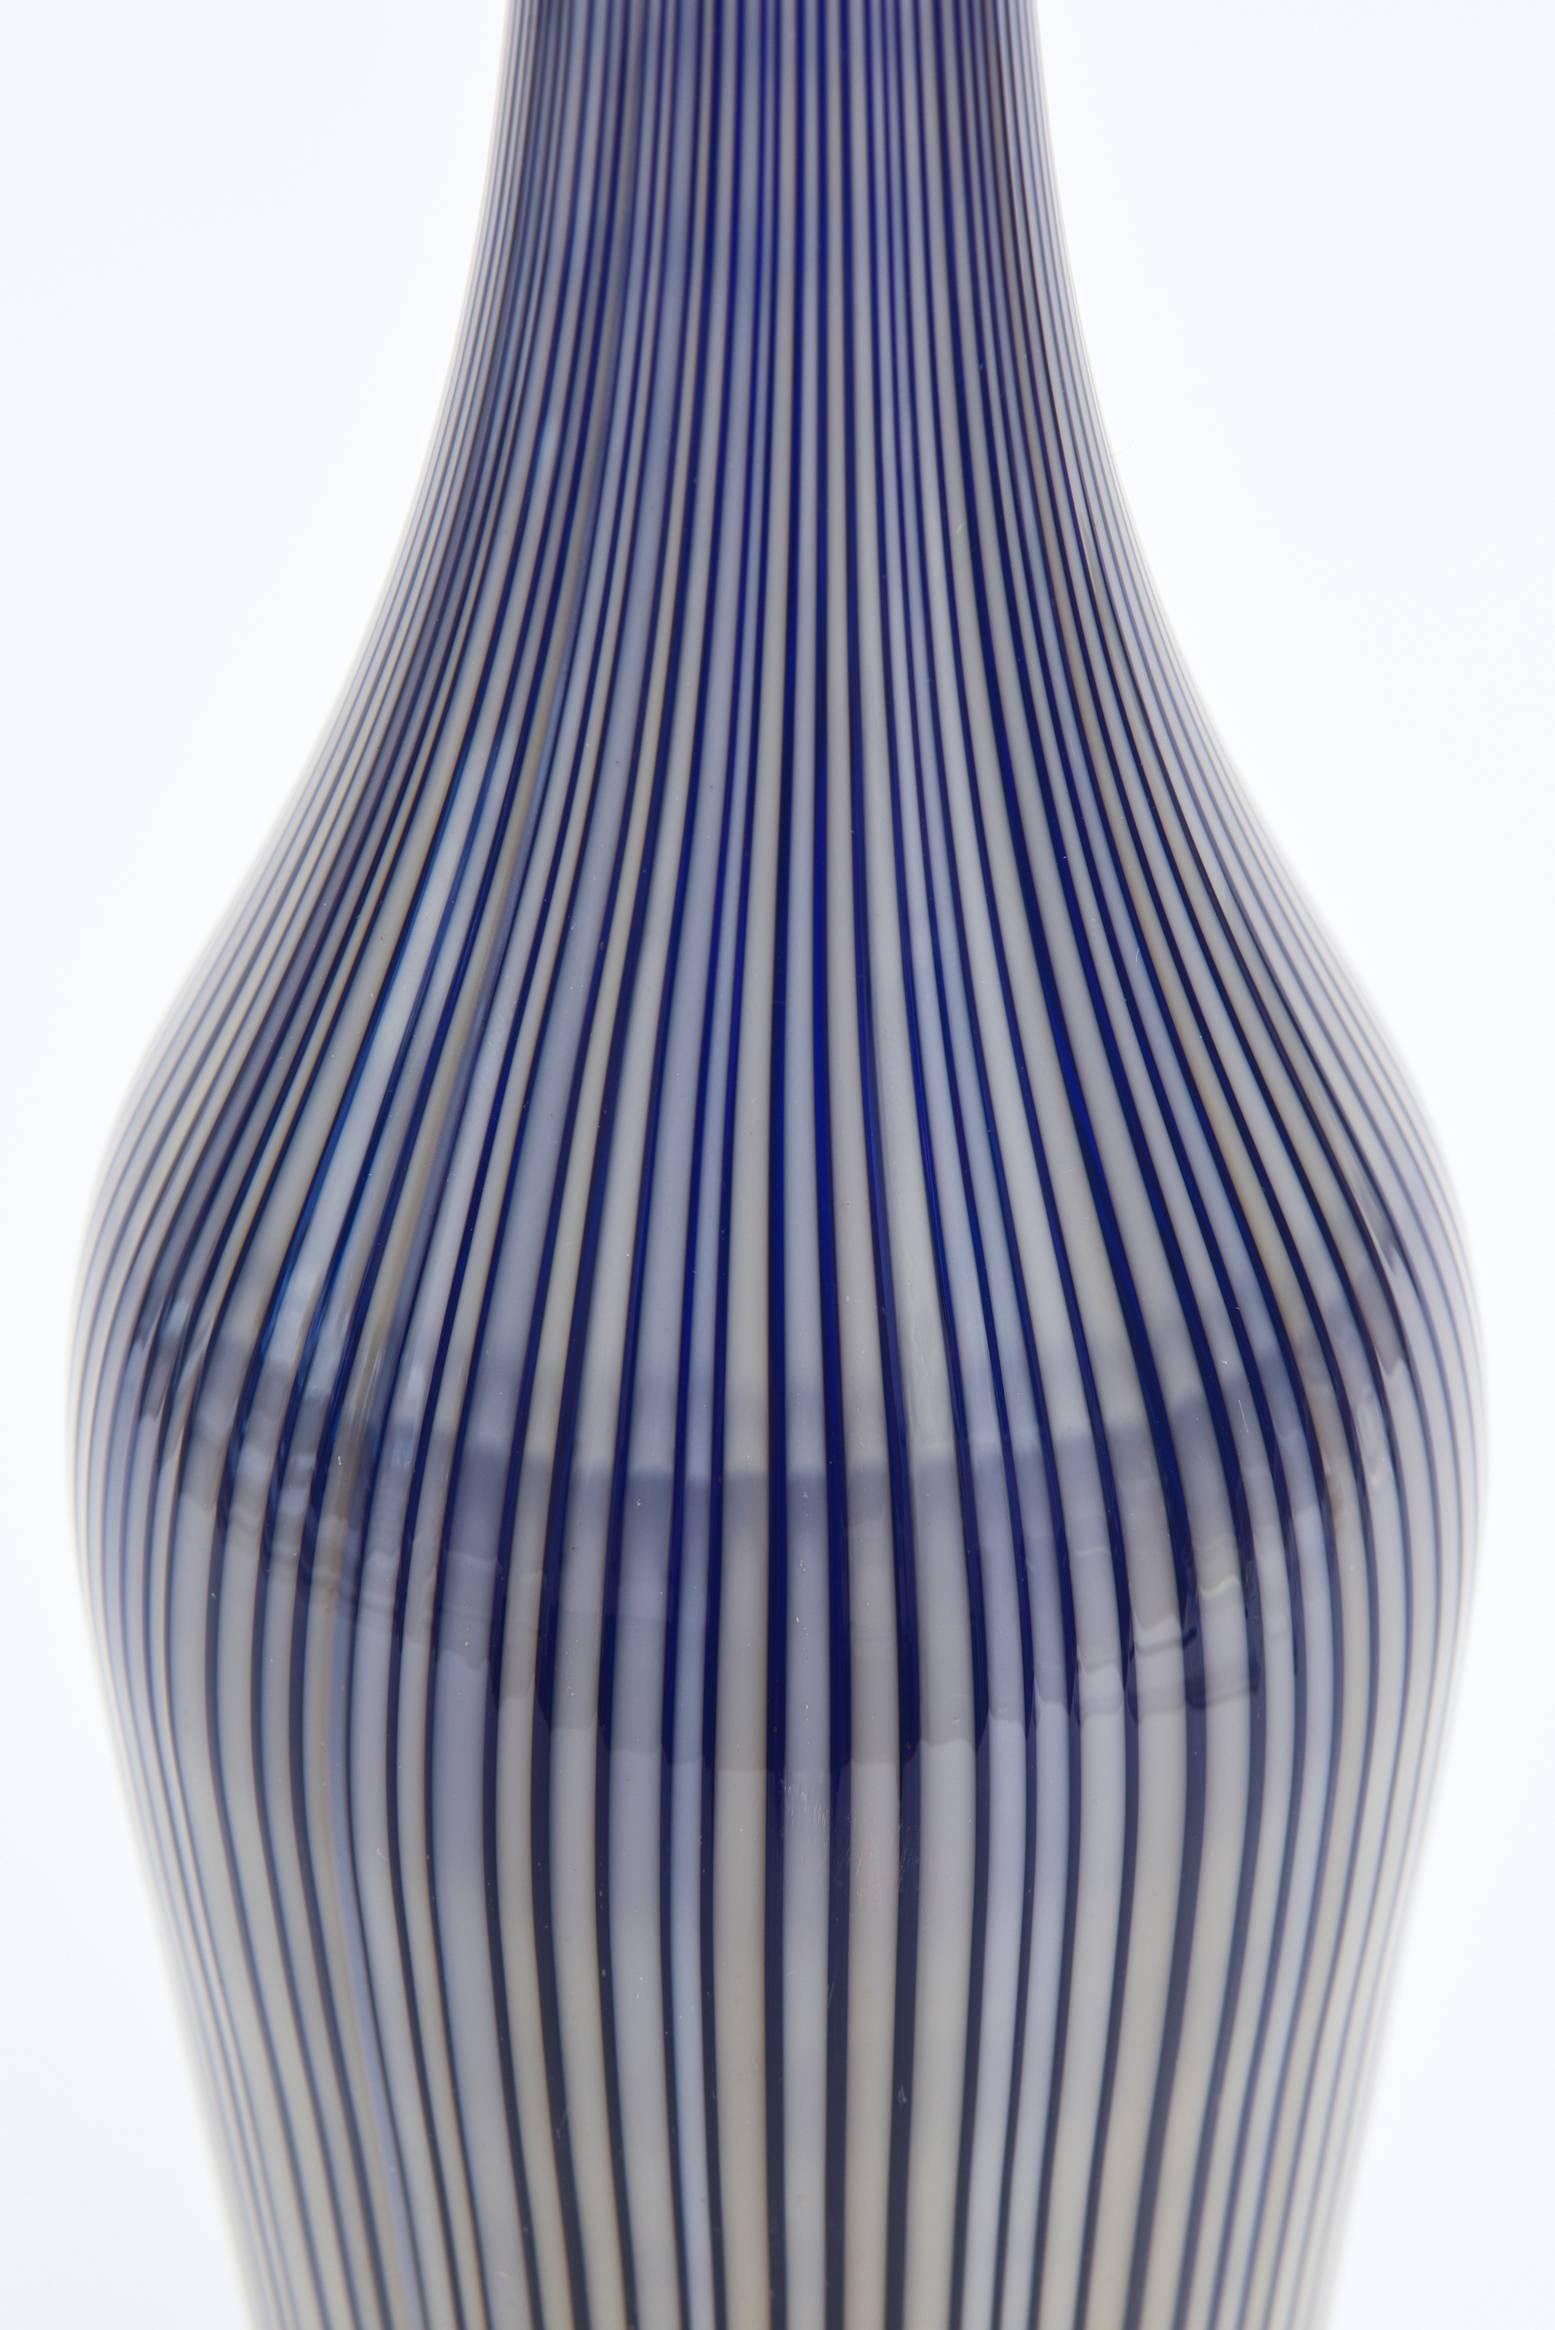 Contemporary Murano Cenedese Striped Bottle, Vessel, Glass Sculpture